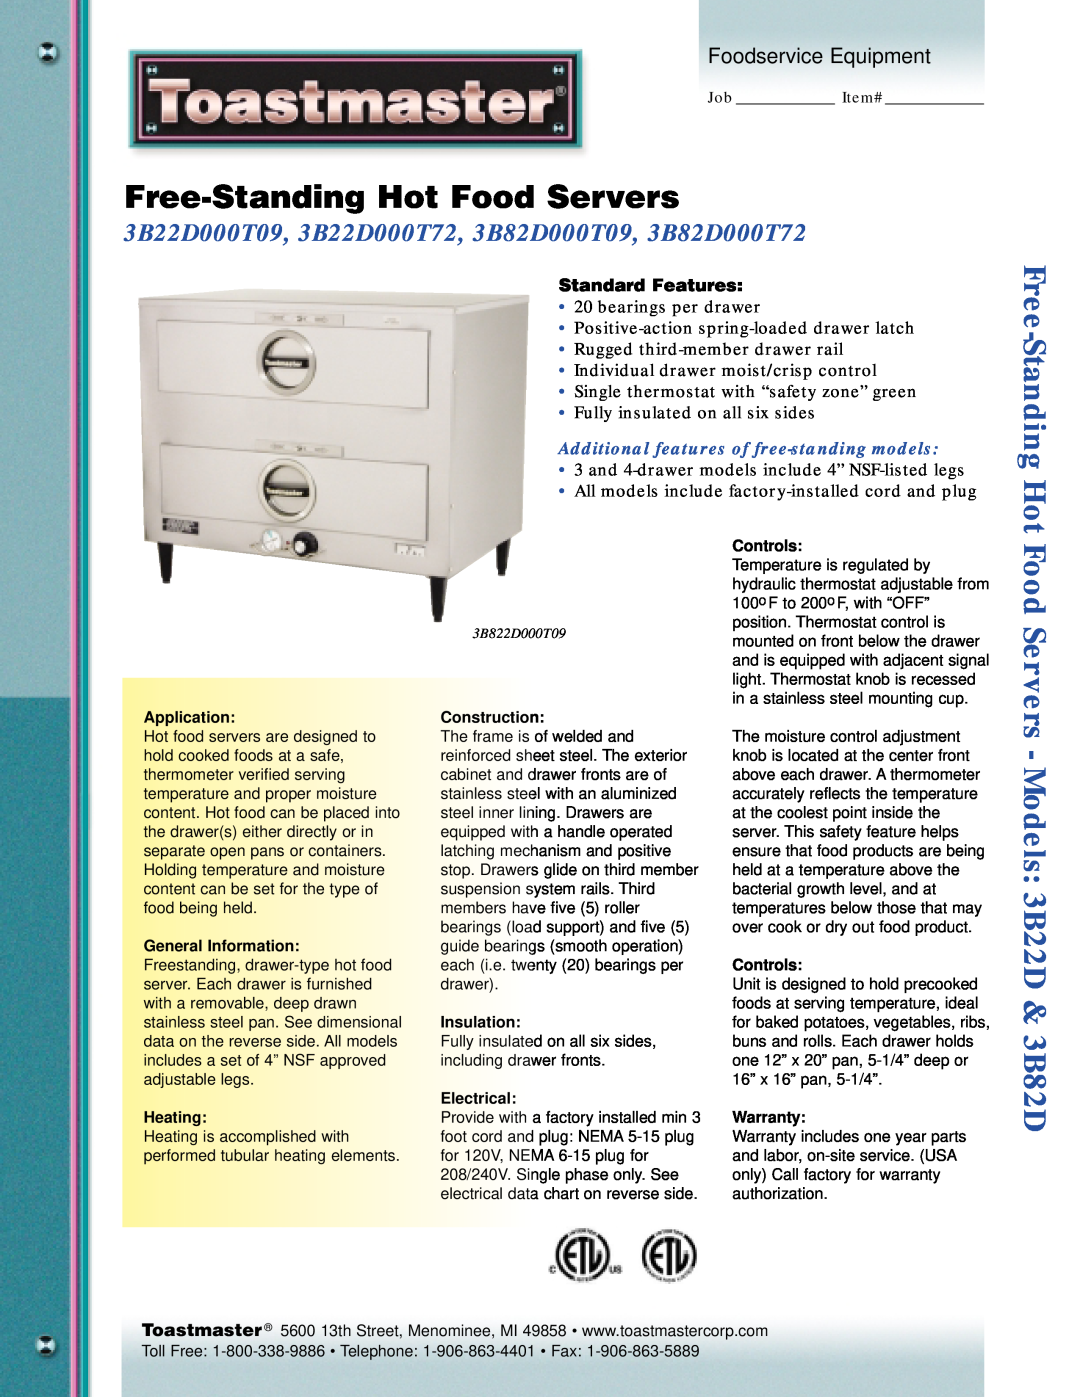 Toastmaster 3B22D000T09 warranty Free-StandingHot Food Servers, Standard Features, Food Servers - Models 3B22D & 3B82D 